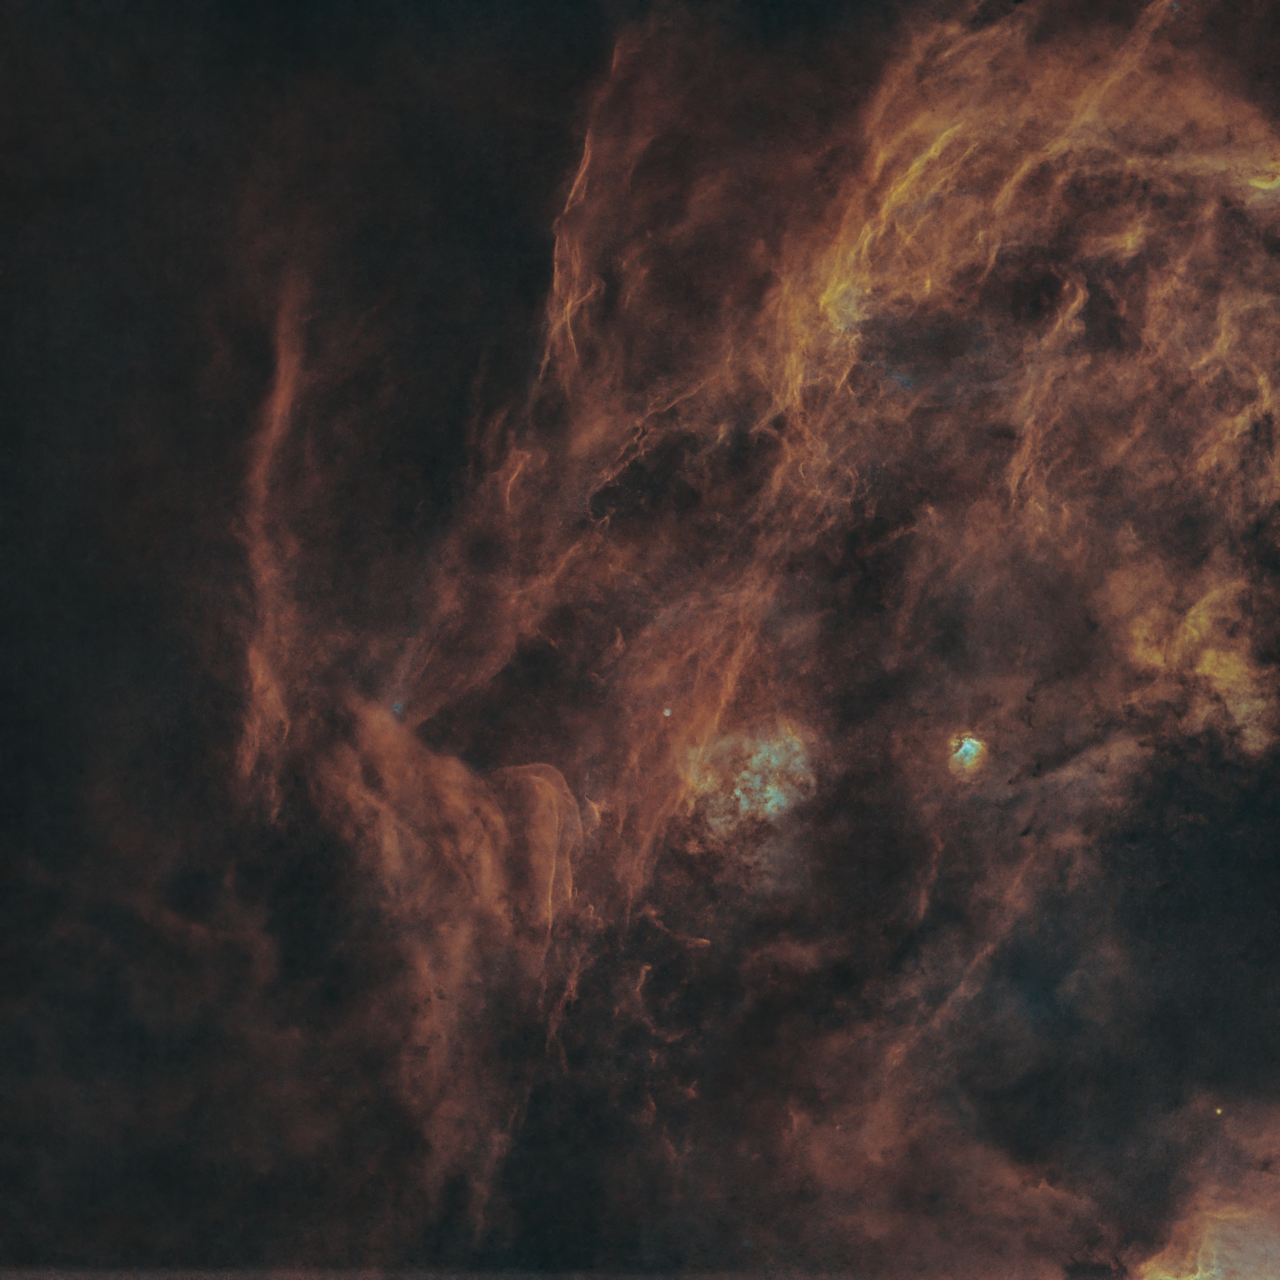 Cygnus near Sh2-115 SHORGBStars Sii 43x360s Sii 5x900s Ha 31x360s Oiii 84x360s R 21x180s G 24x180s ESD B 28x180s Draft2 Starless jpg